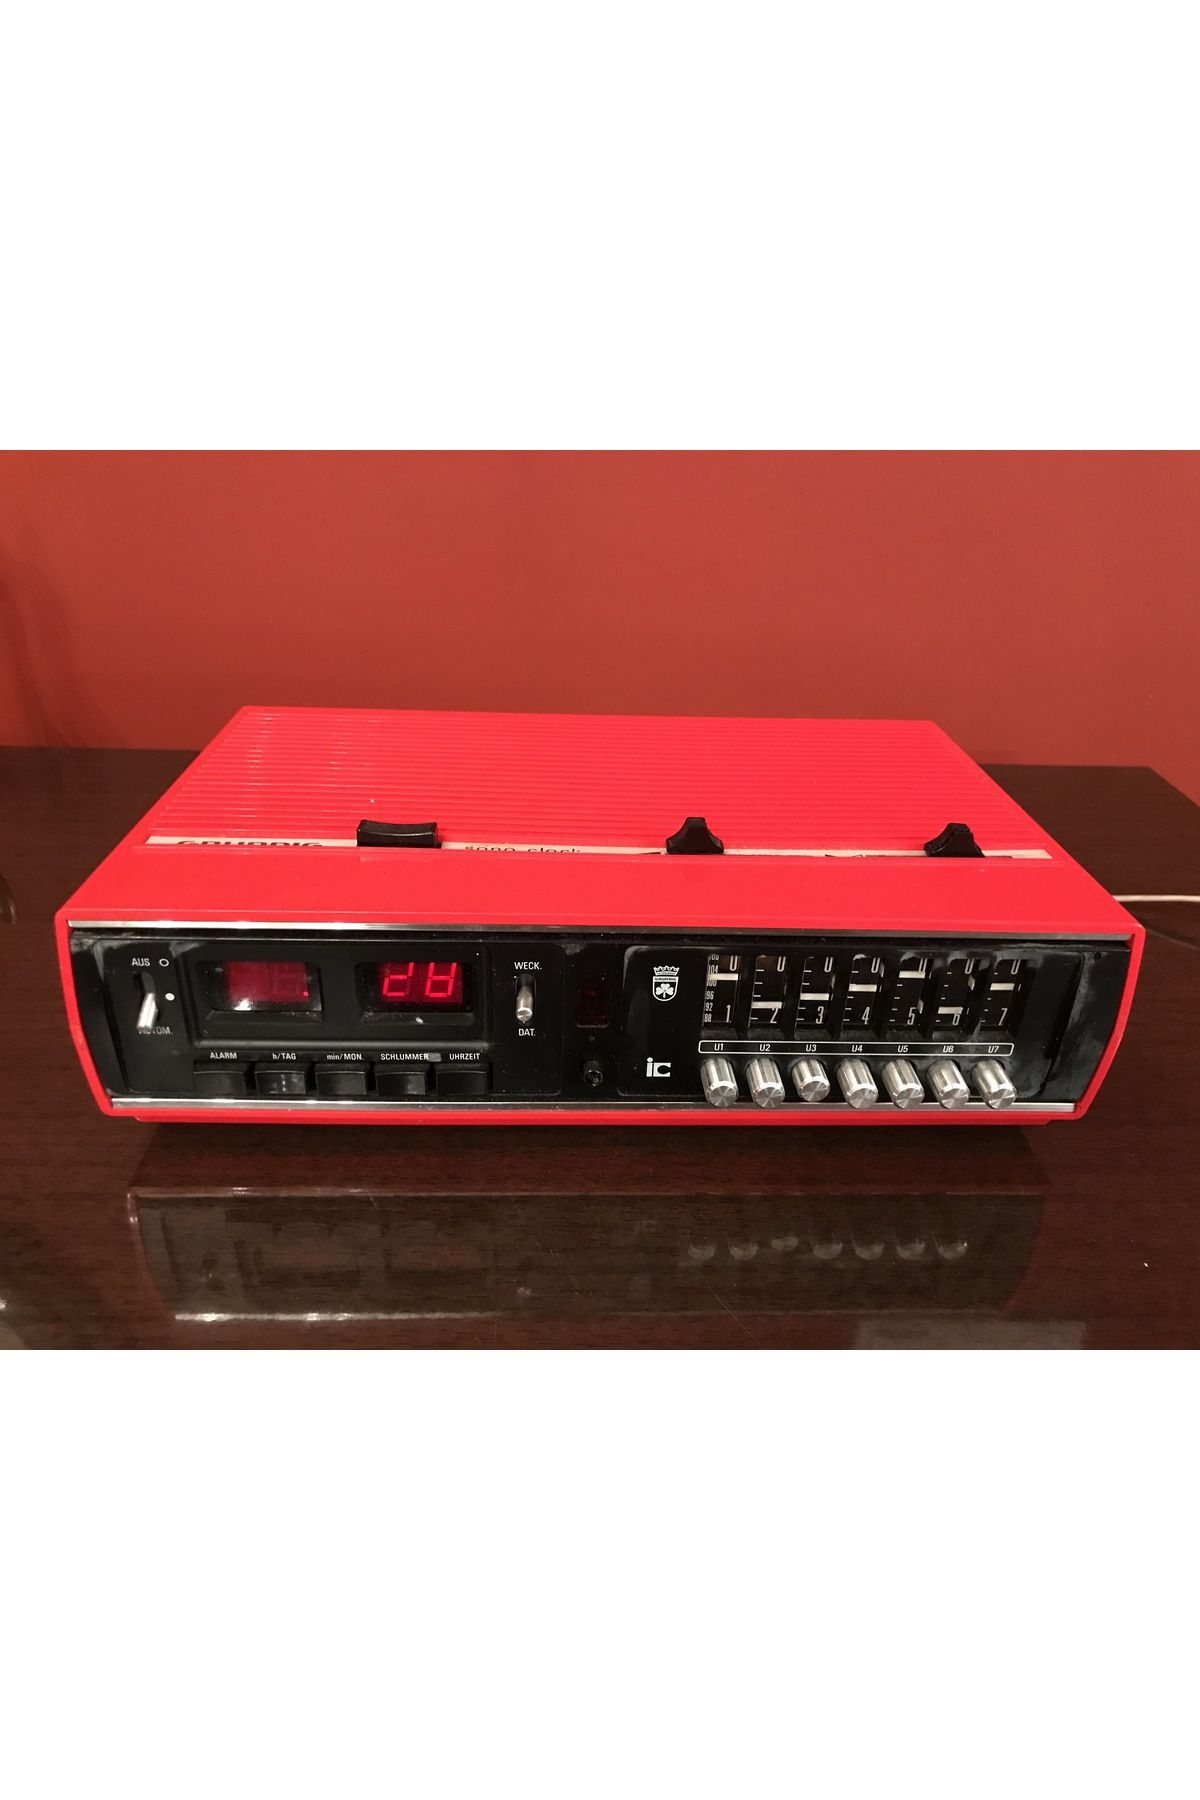 Grundig 1970 ler Grundig sono clock kırmızı renkli Alarmlı radyo - çalışır durumda